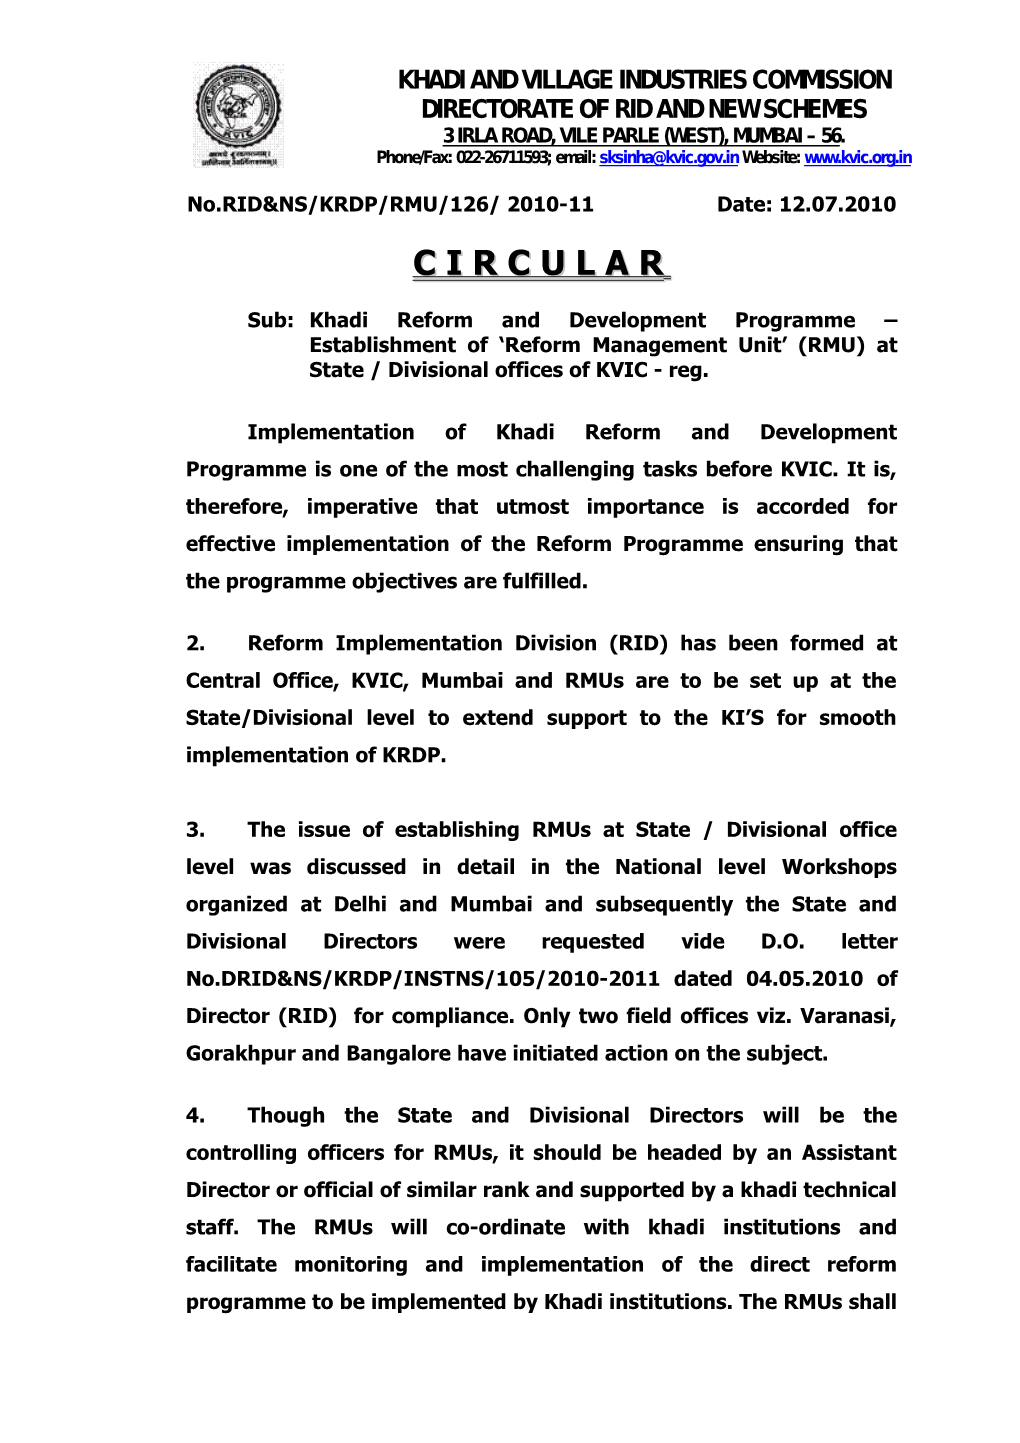 Sub:Khadi Reform and Development Programme Establishment of Reform Management Unit (RMU)